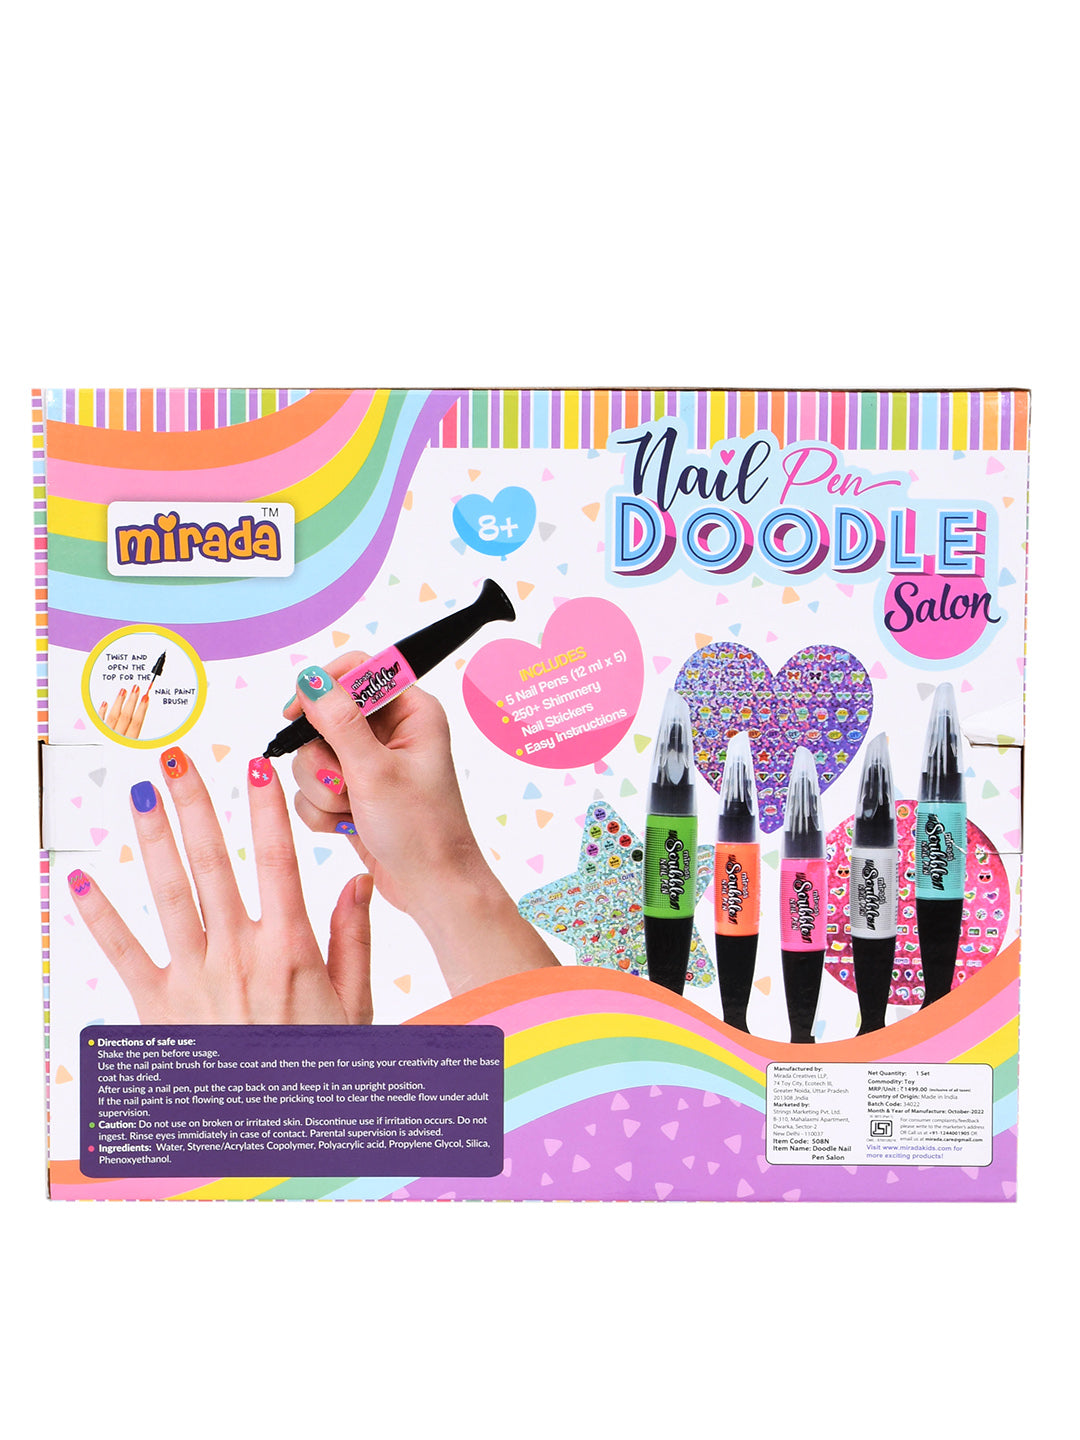 NEW MADAM GLAM Acrylic Nail Art Pens!!! | Doodle Halloween Nails | HEMA  FREE Nail Products!!! - YouTube